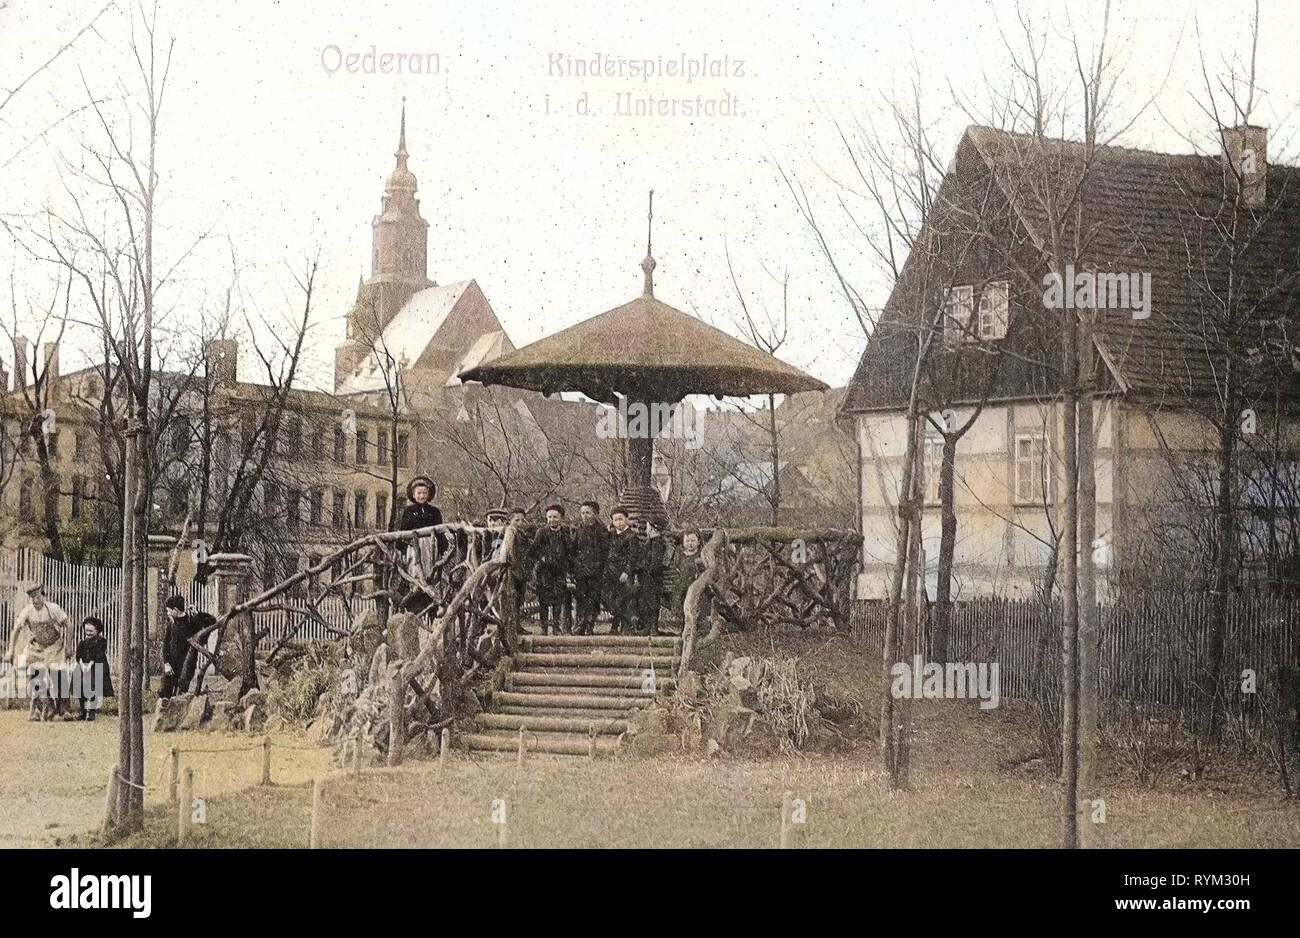 Playgrounds in Saxony, Churches in Oederan, Buildings in Oederan, 1906, Landkreis Mittelsachsen, Oederan, Kinderspielplatz, Germany Stock Photo